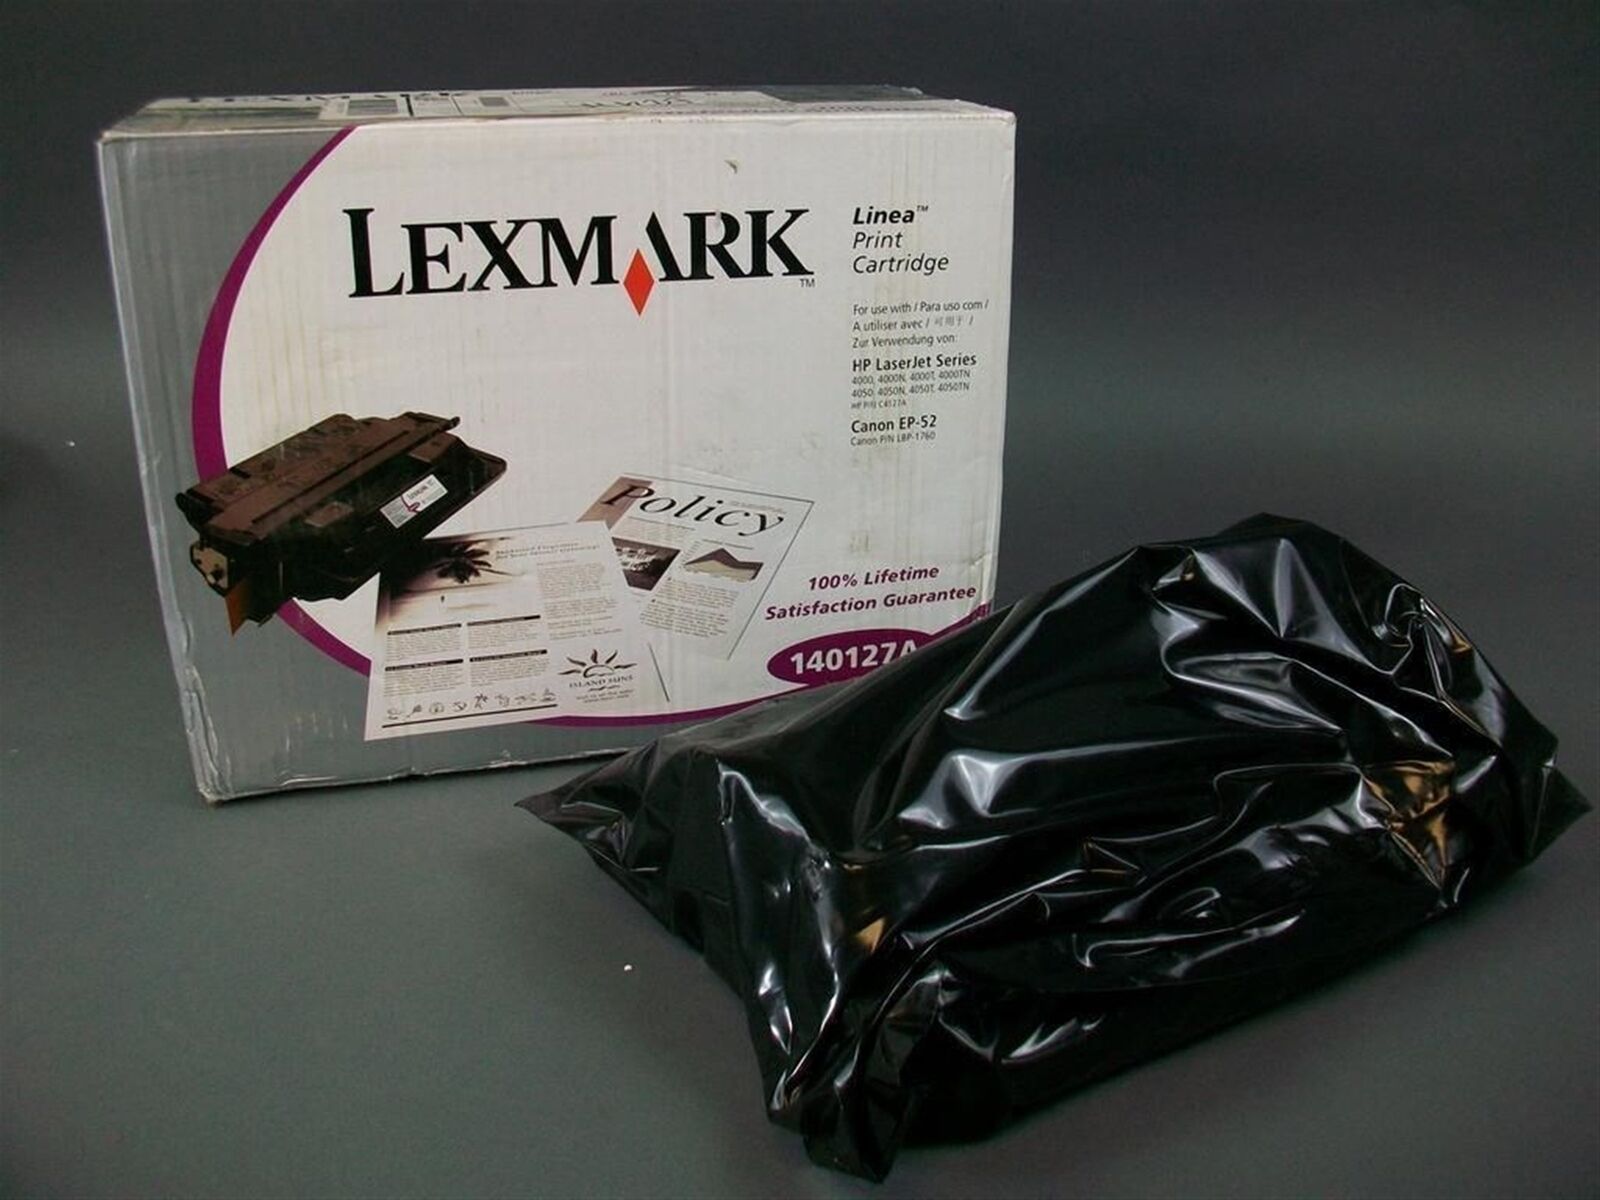 Pair of Lexmark 140127A Print Cartridges